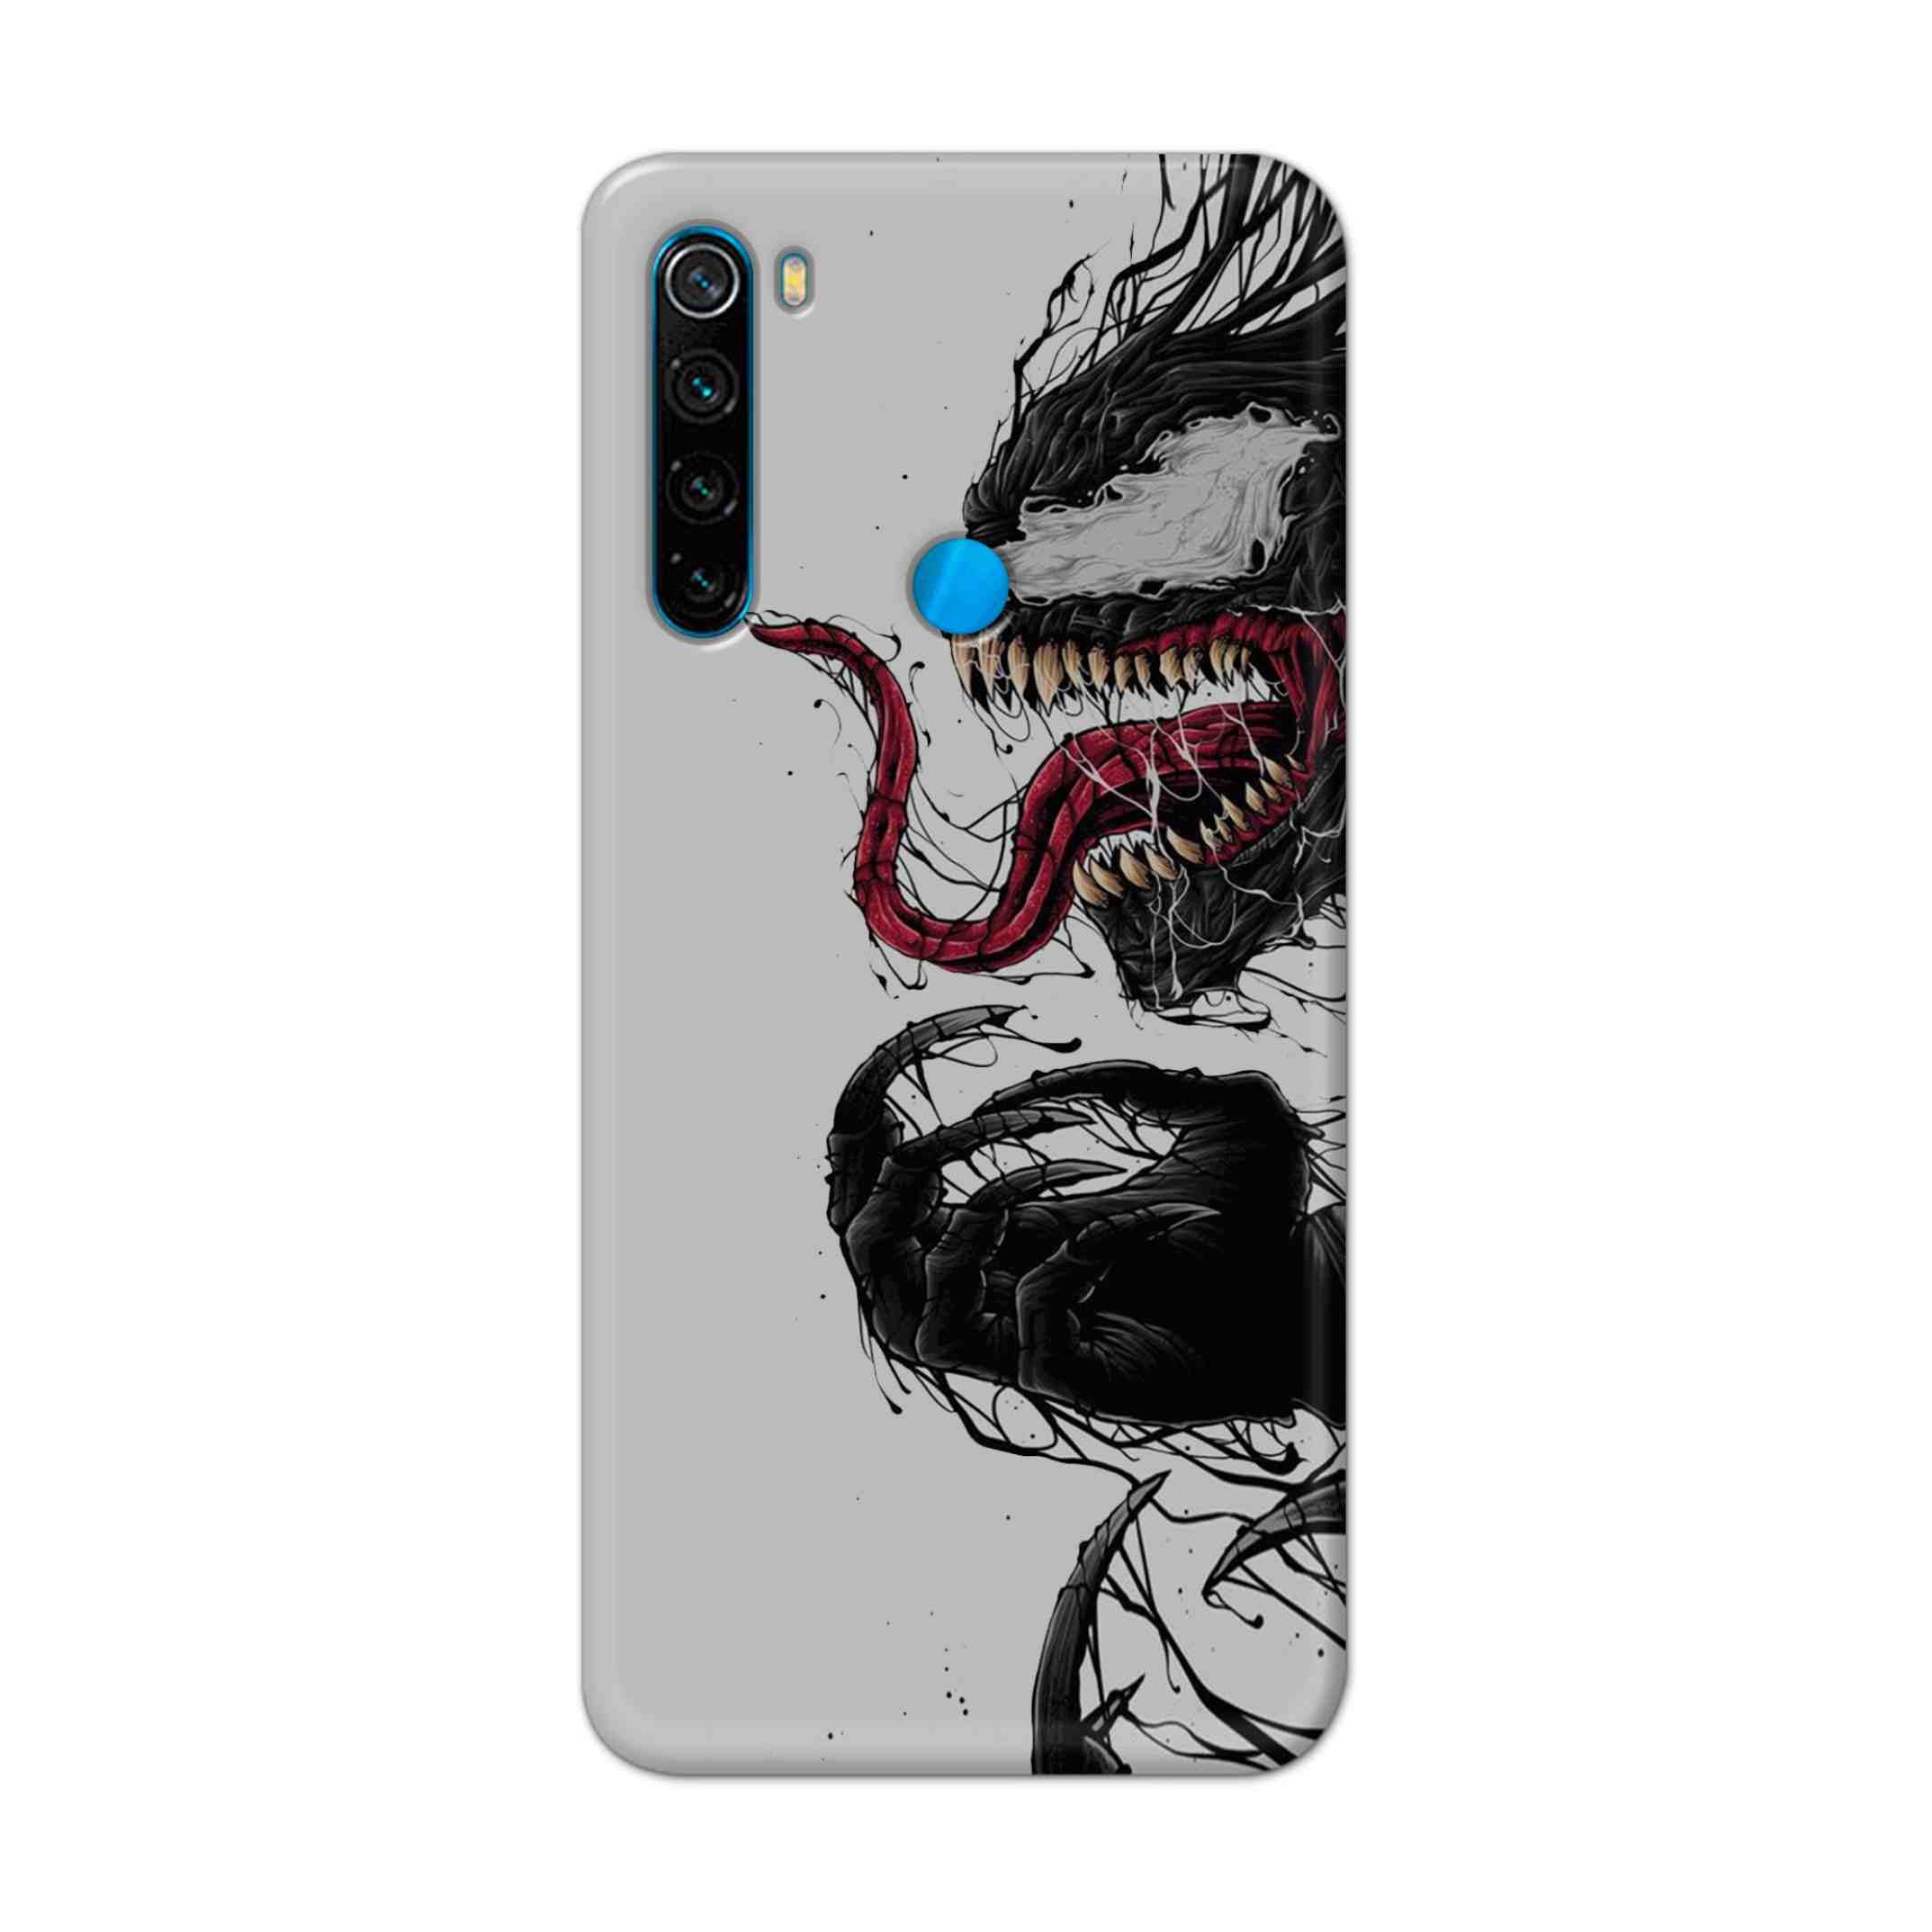 Buy Venom Crazy Hard Back Mobile Phone Case Cover For Xiaomi Redmi Note 8 Online